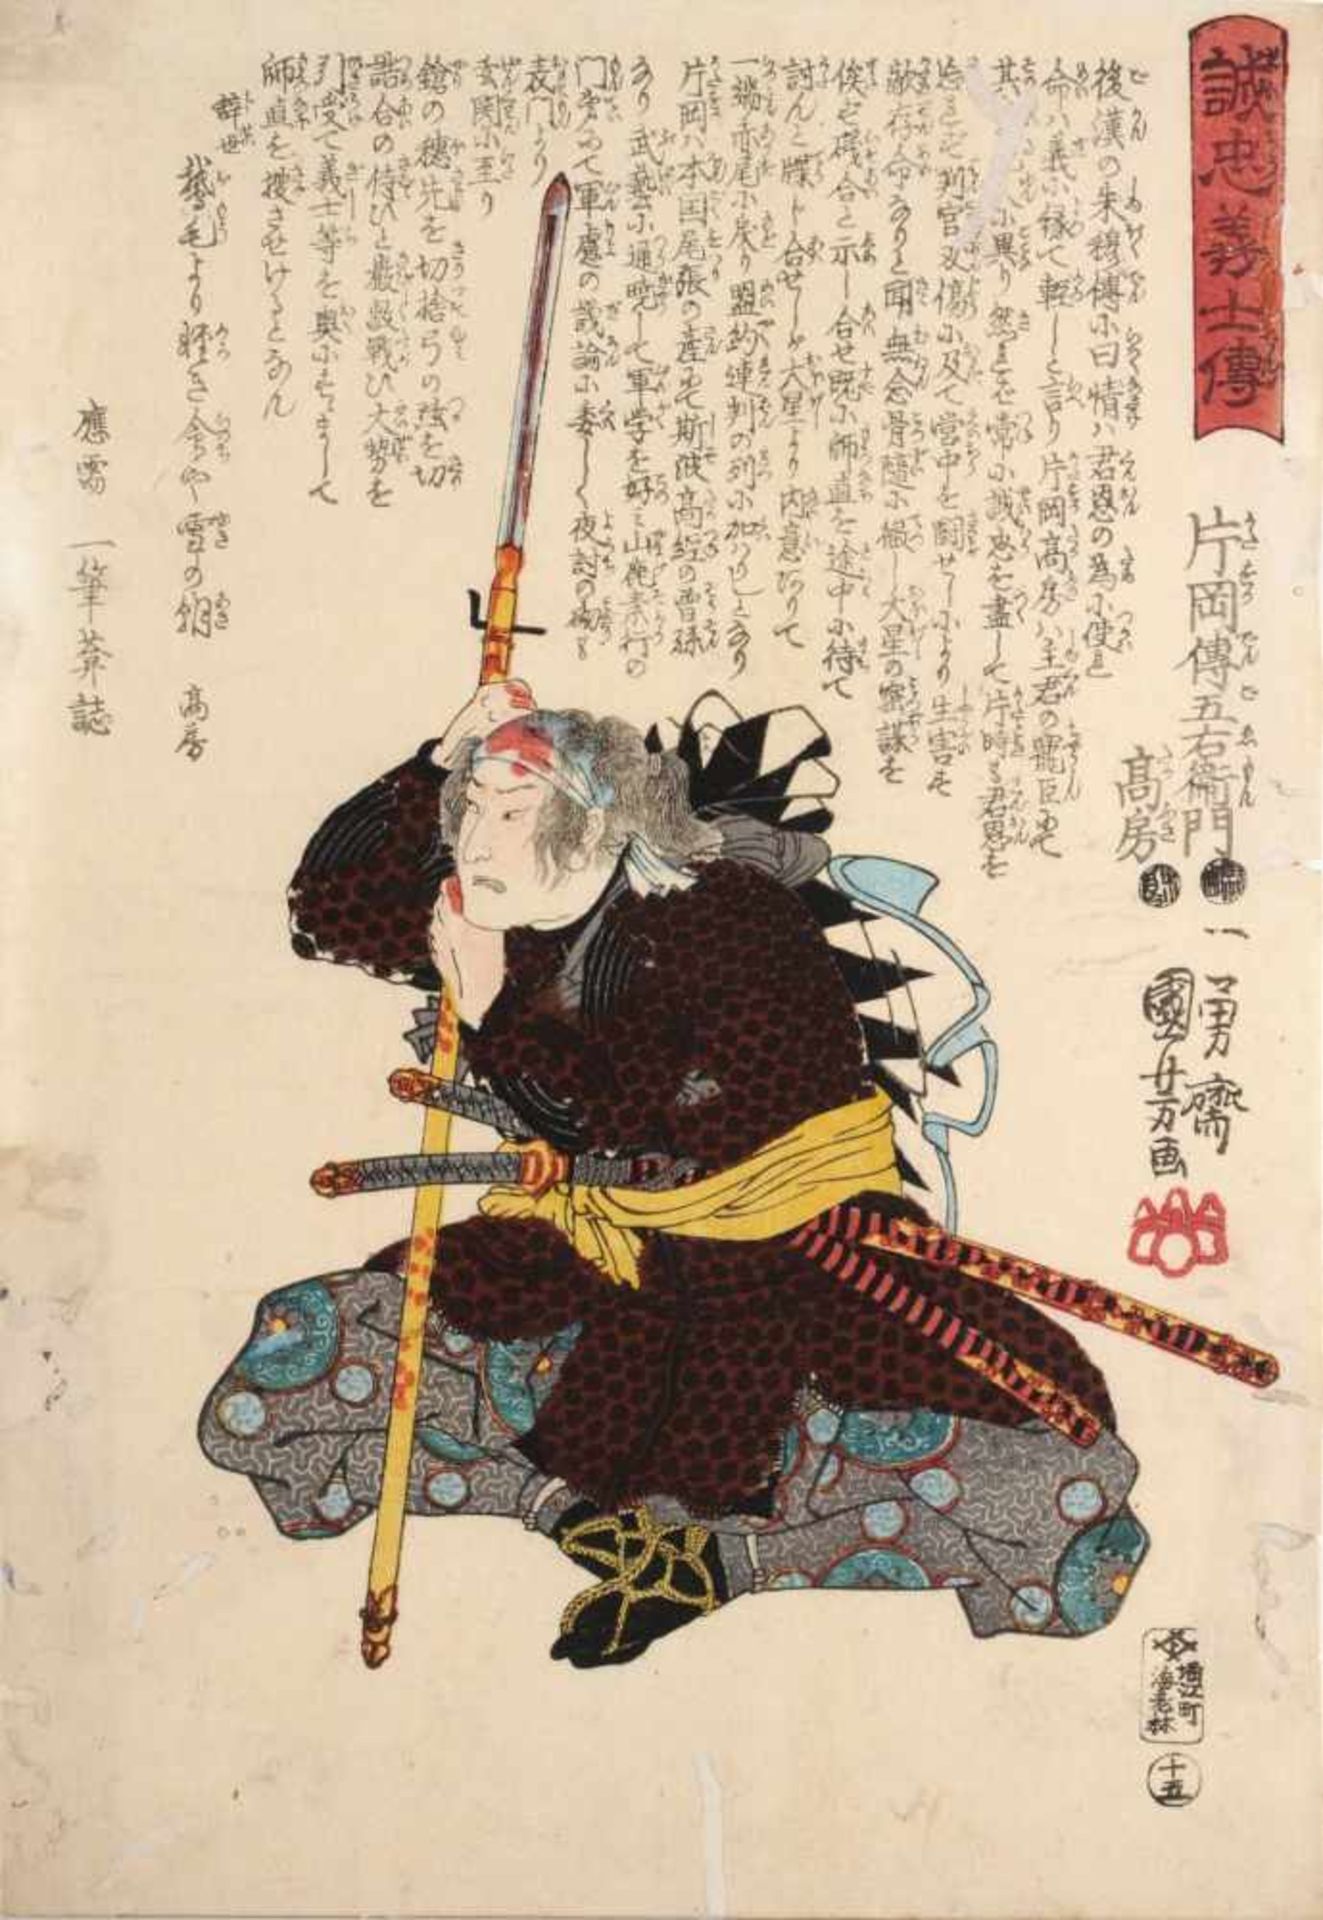 Utagawa Kuniyoshi "Kataoka Dengoemon Takafusa" (Samurai, an seinem blutbefleckten Speer lehnend).